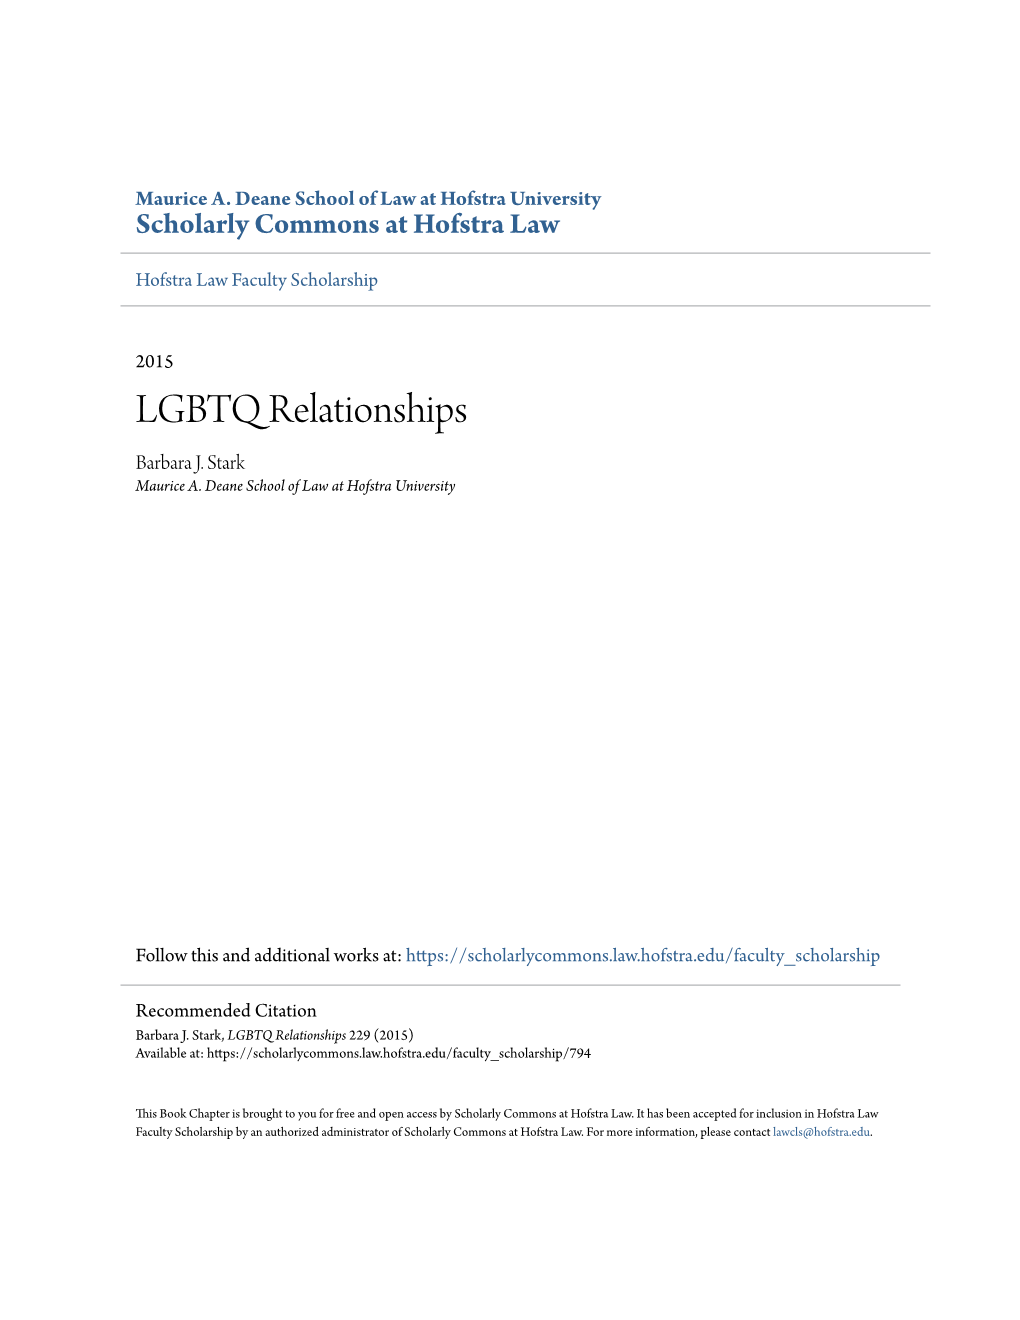 LGBTQ Relationships Barbara J